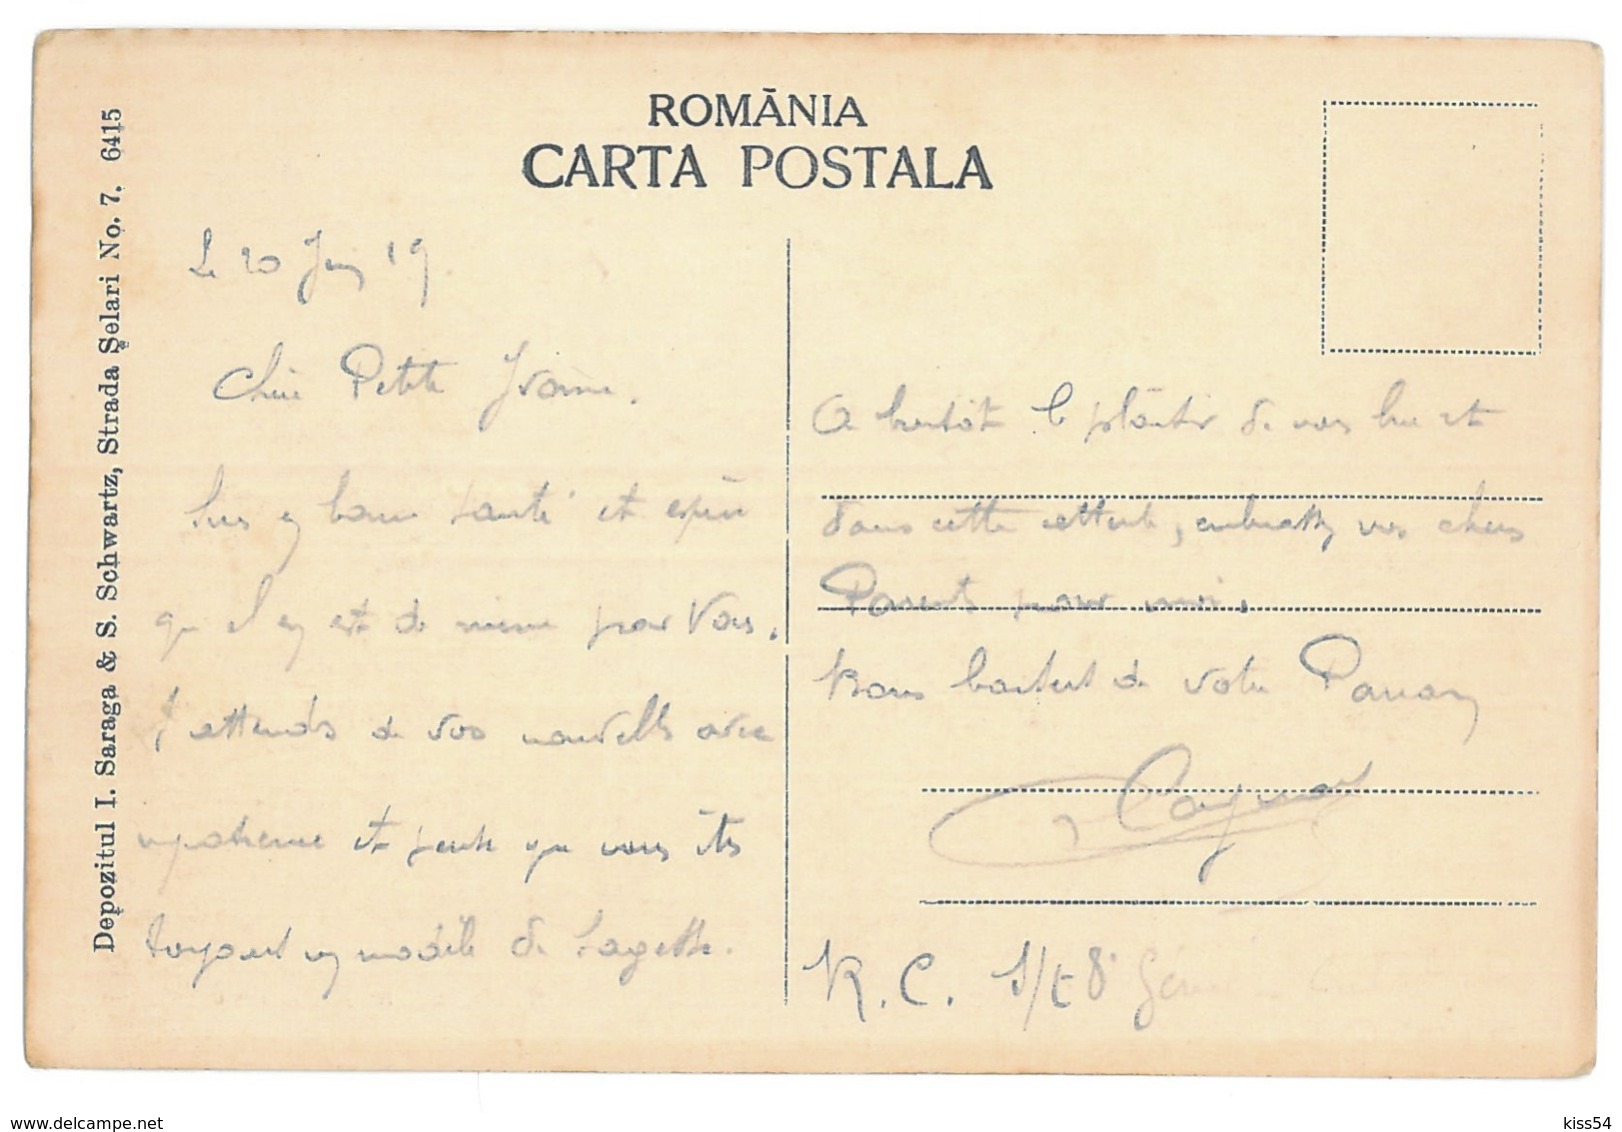 RO 42 - 15702 BUCURESTI, Elisabeta Ave. Romania - Old Postcard - Used - 1919 - Roumanie